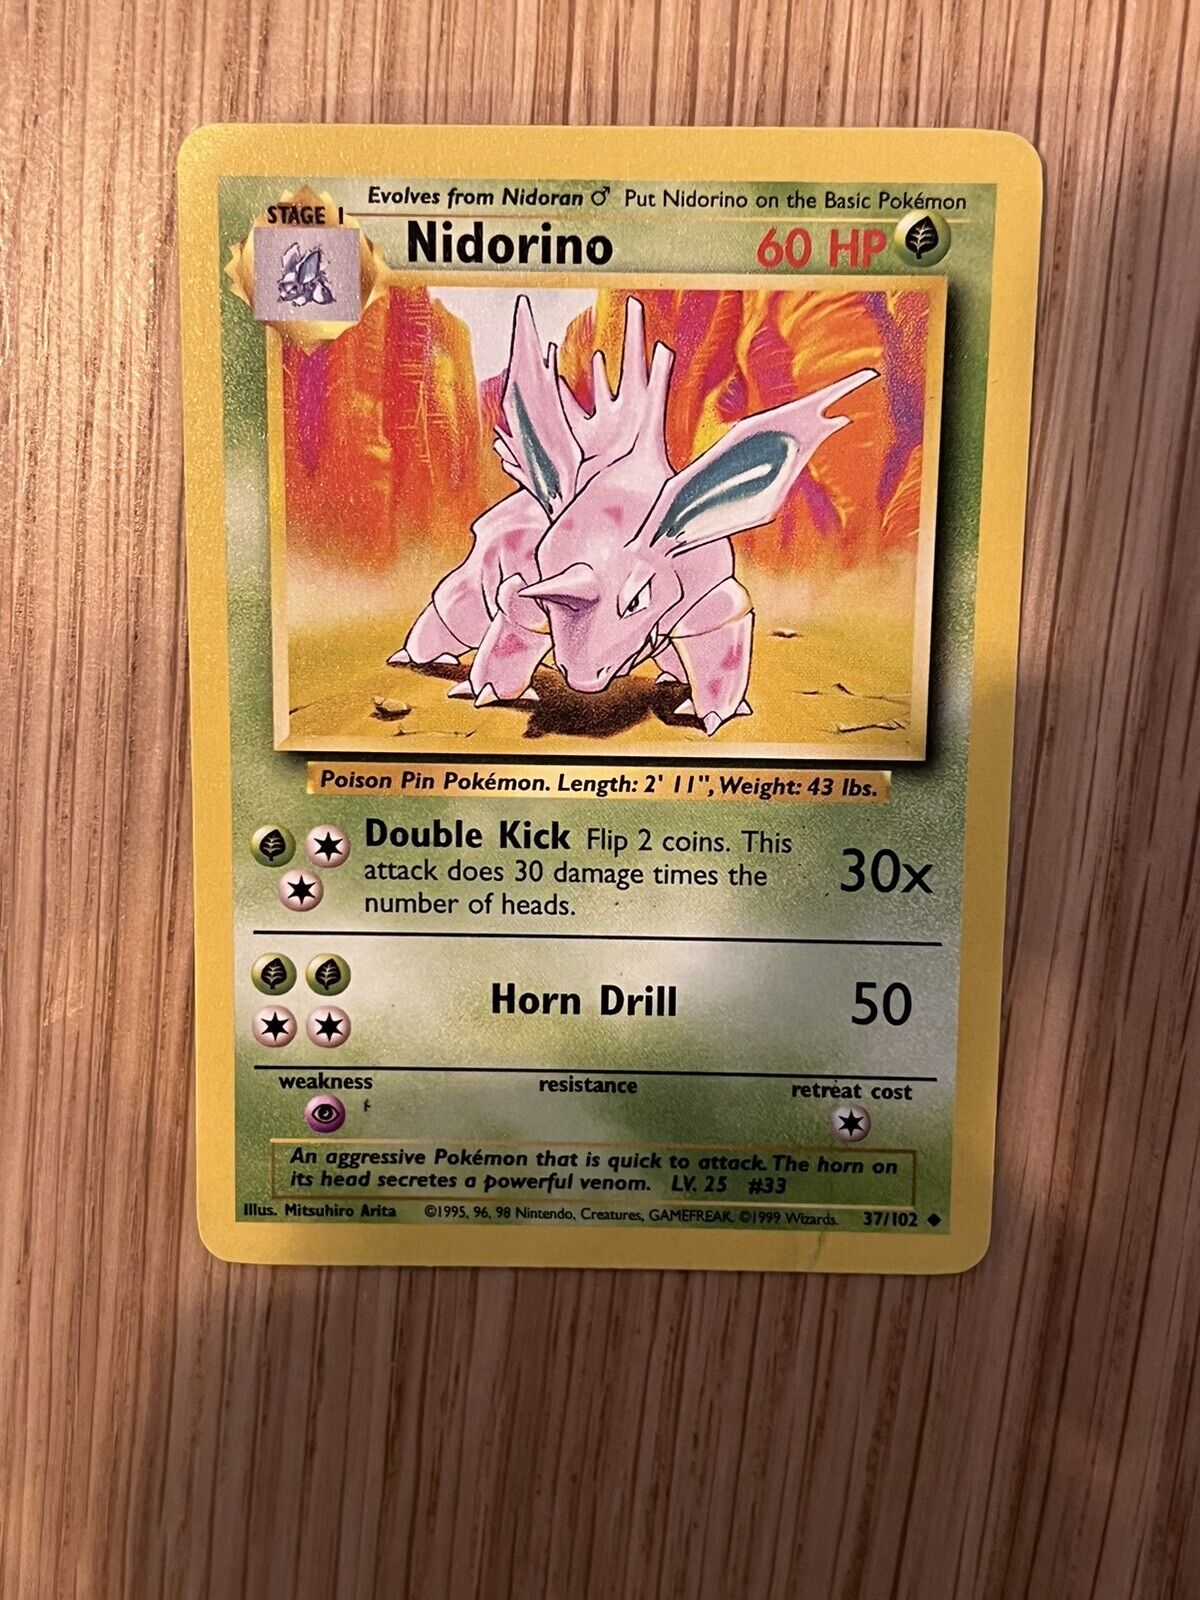 Pokémon TCG Nidorino Base Set 37/102 Regular Unlimited Uncommon LP Condition